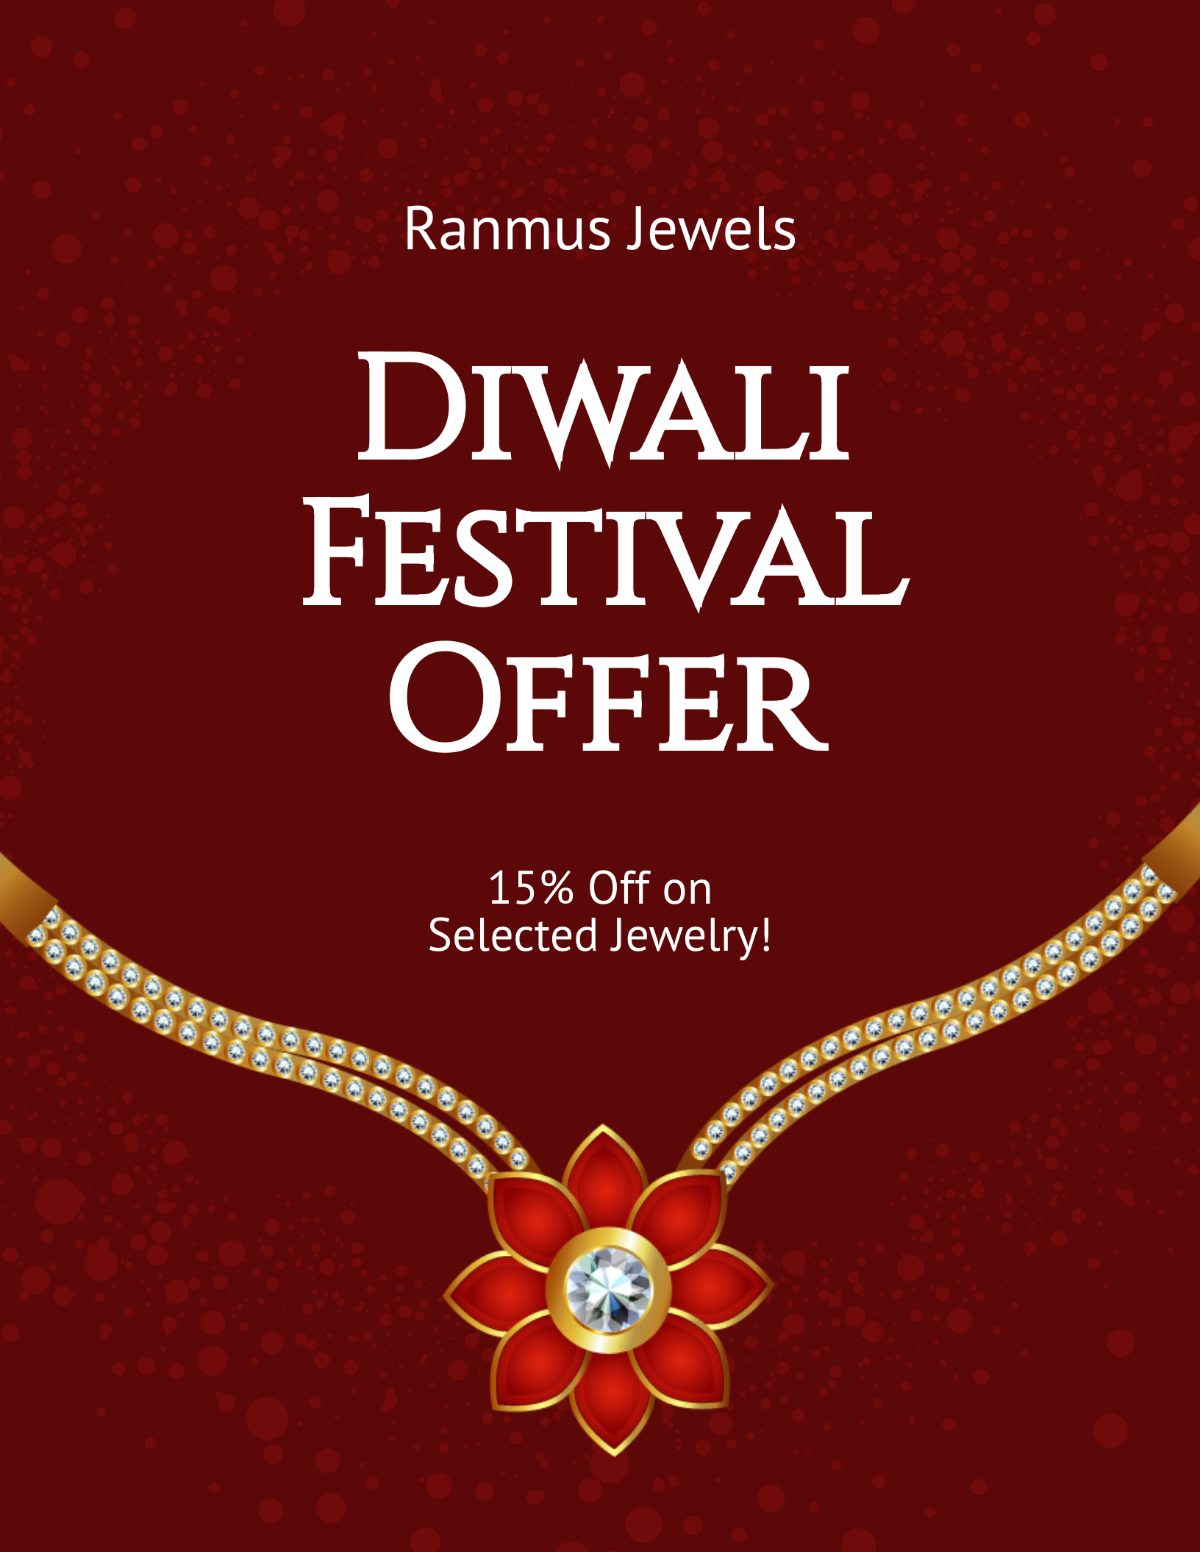 Diwali Festival Offer Flyer Template